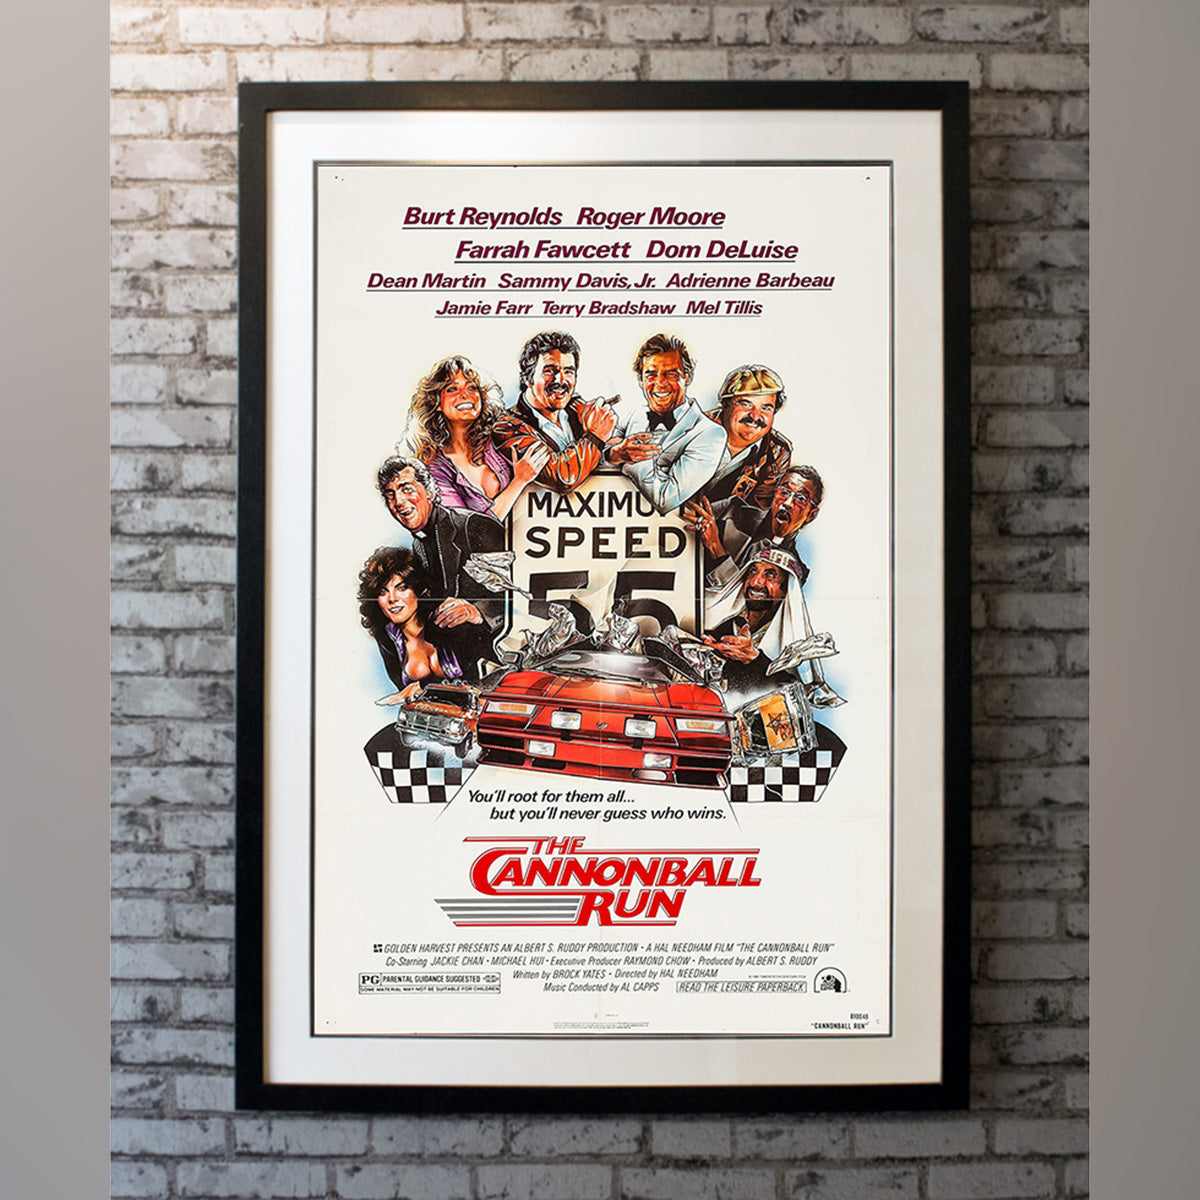 Original Movie Poster of Cannonball Run, The (1981)